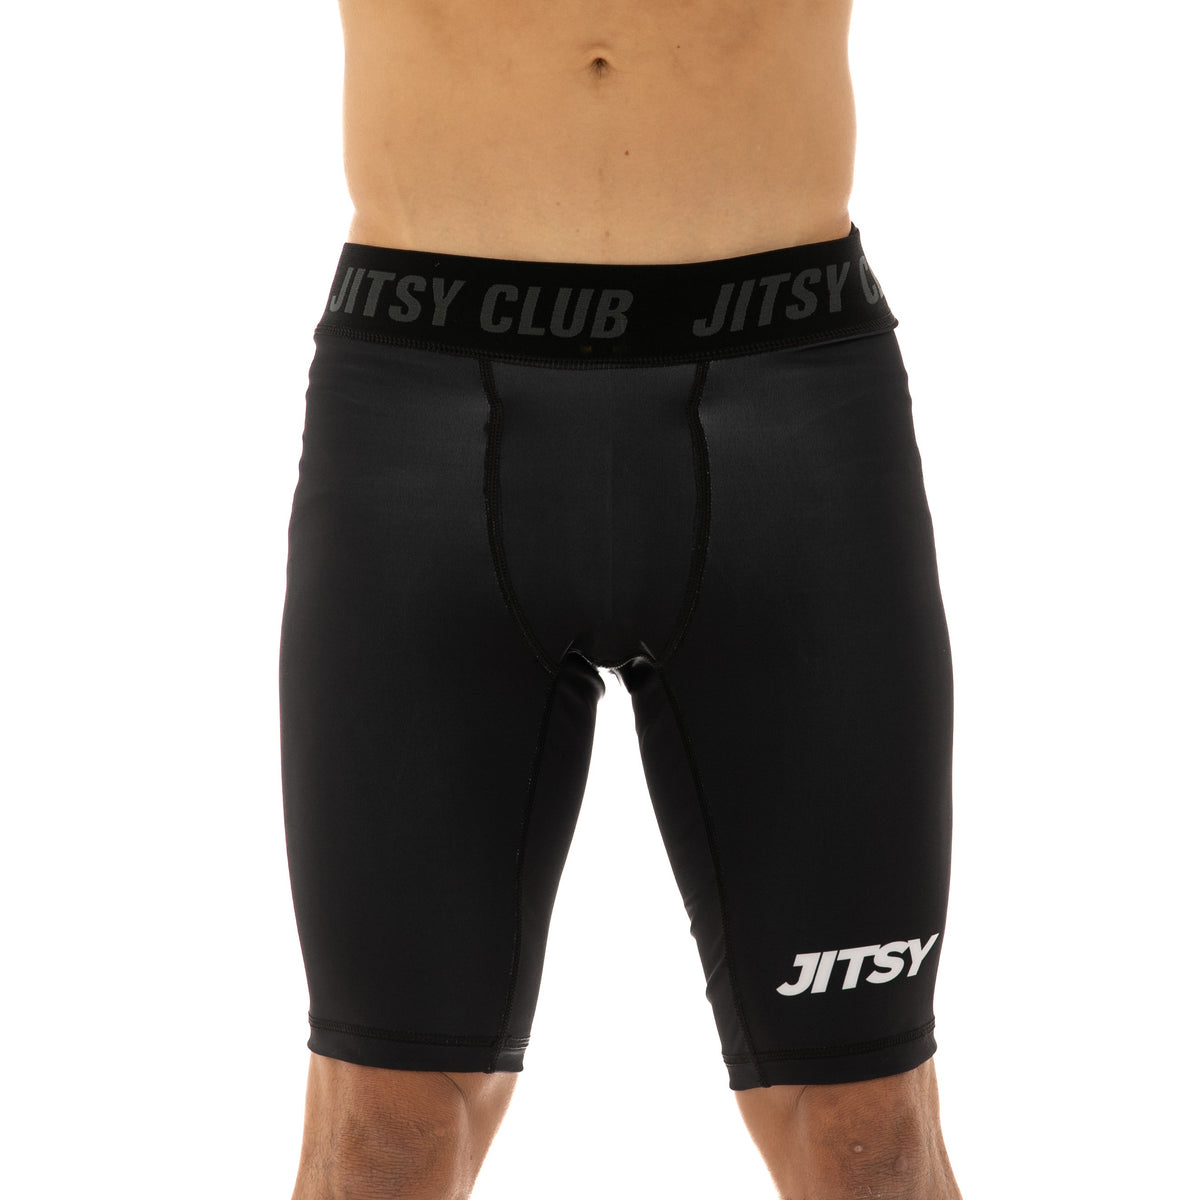 Jitsy Black Compression Shorts - Big Men